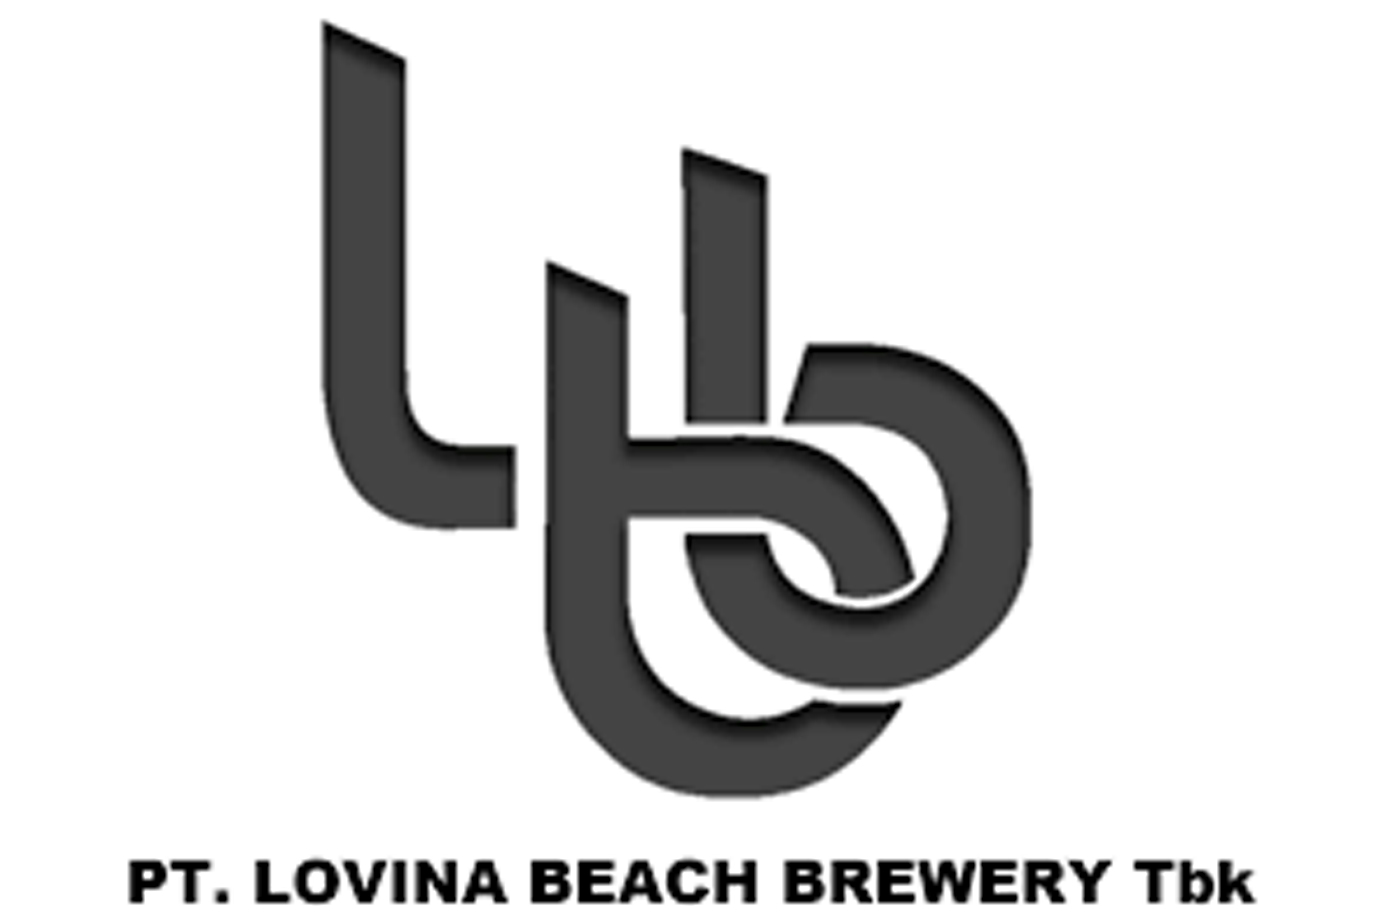 LOVINA BEACH BREWERY (STRK) MASIH SIMPAN DANA IPO SEBESAR Rp57,3 MILIAR